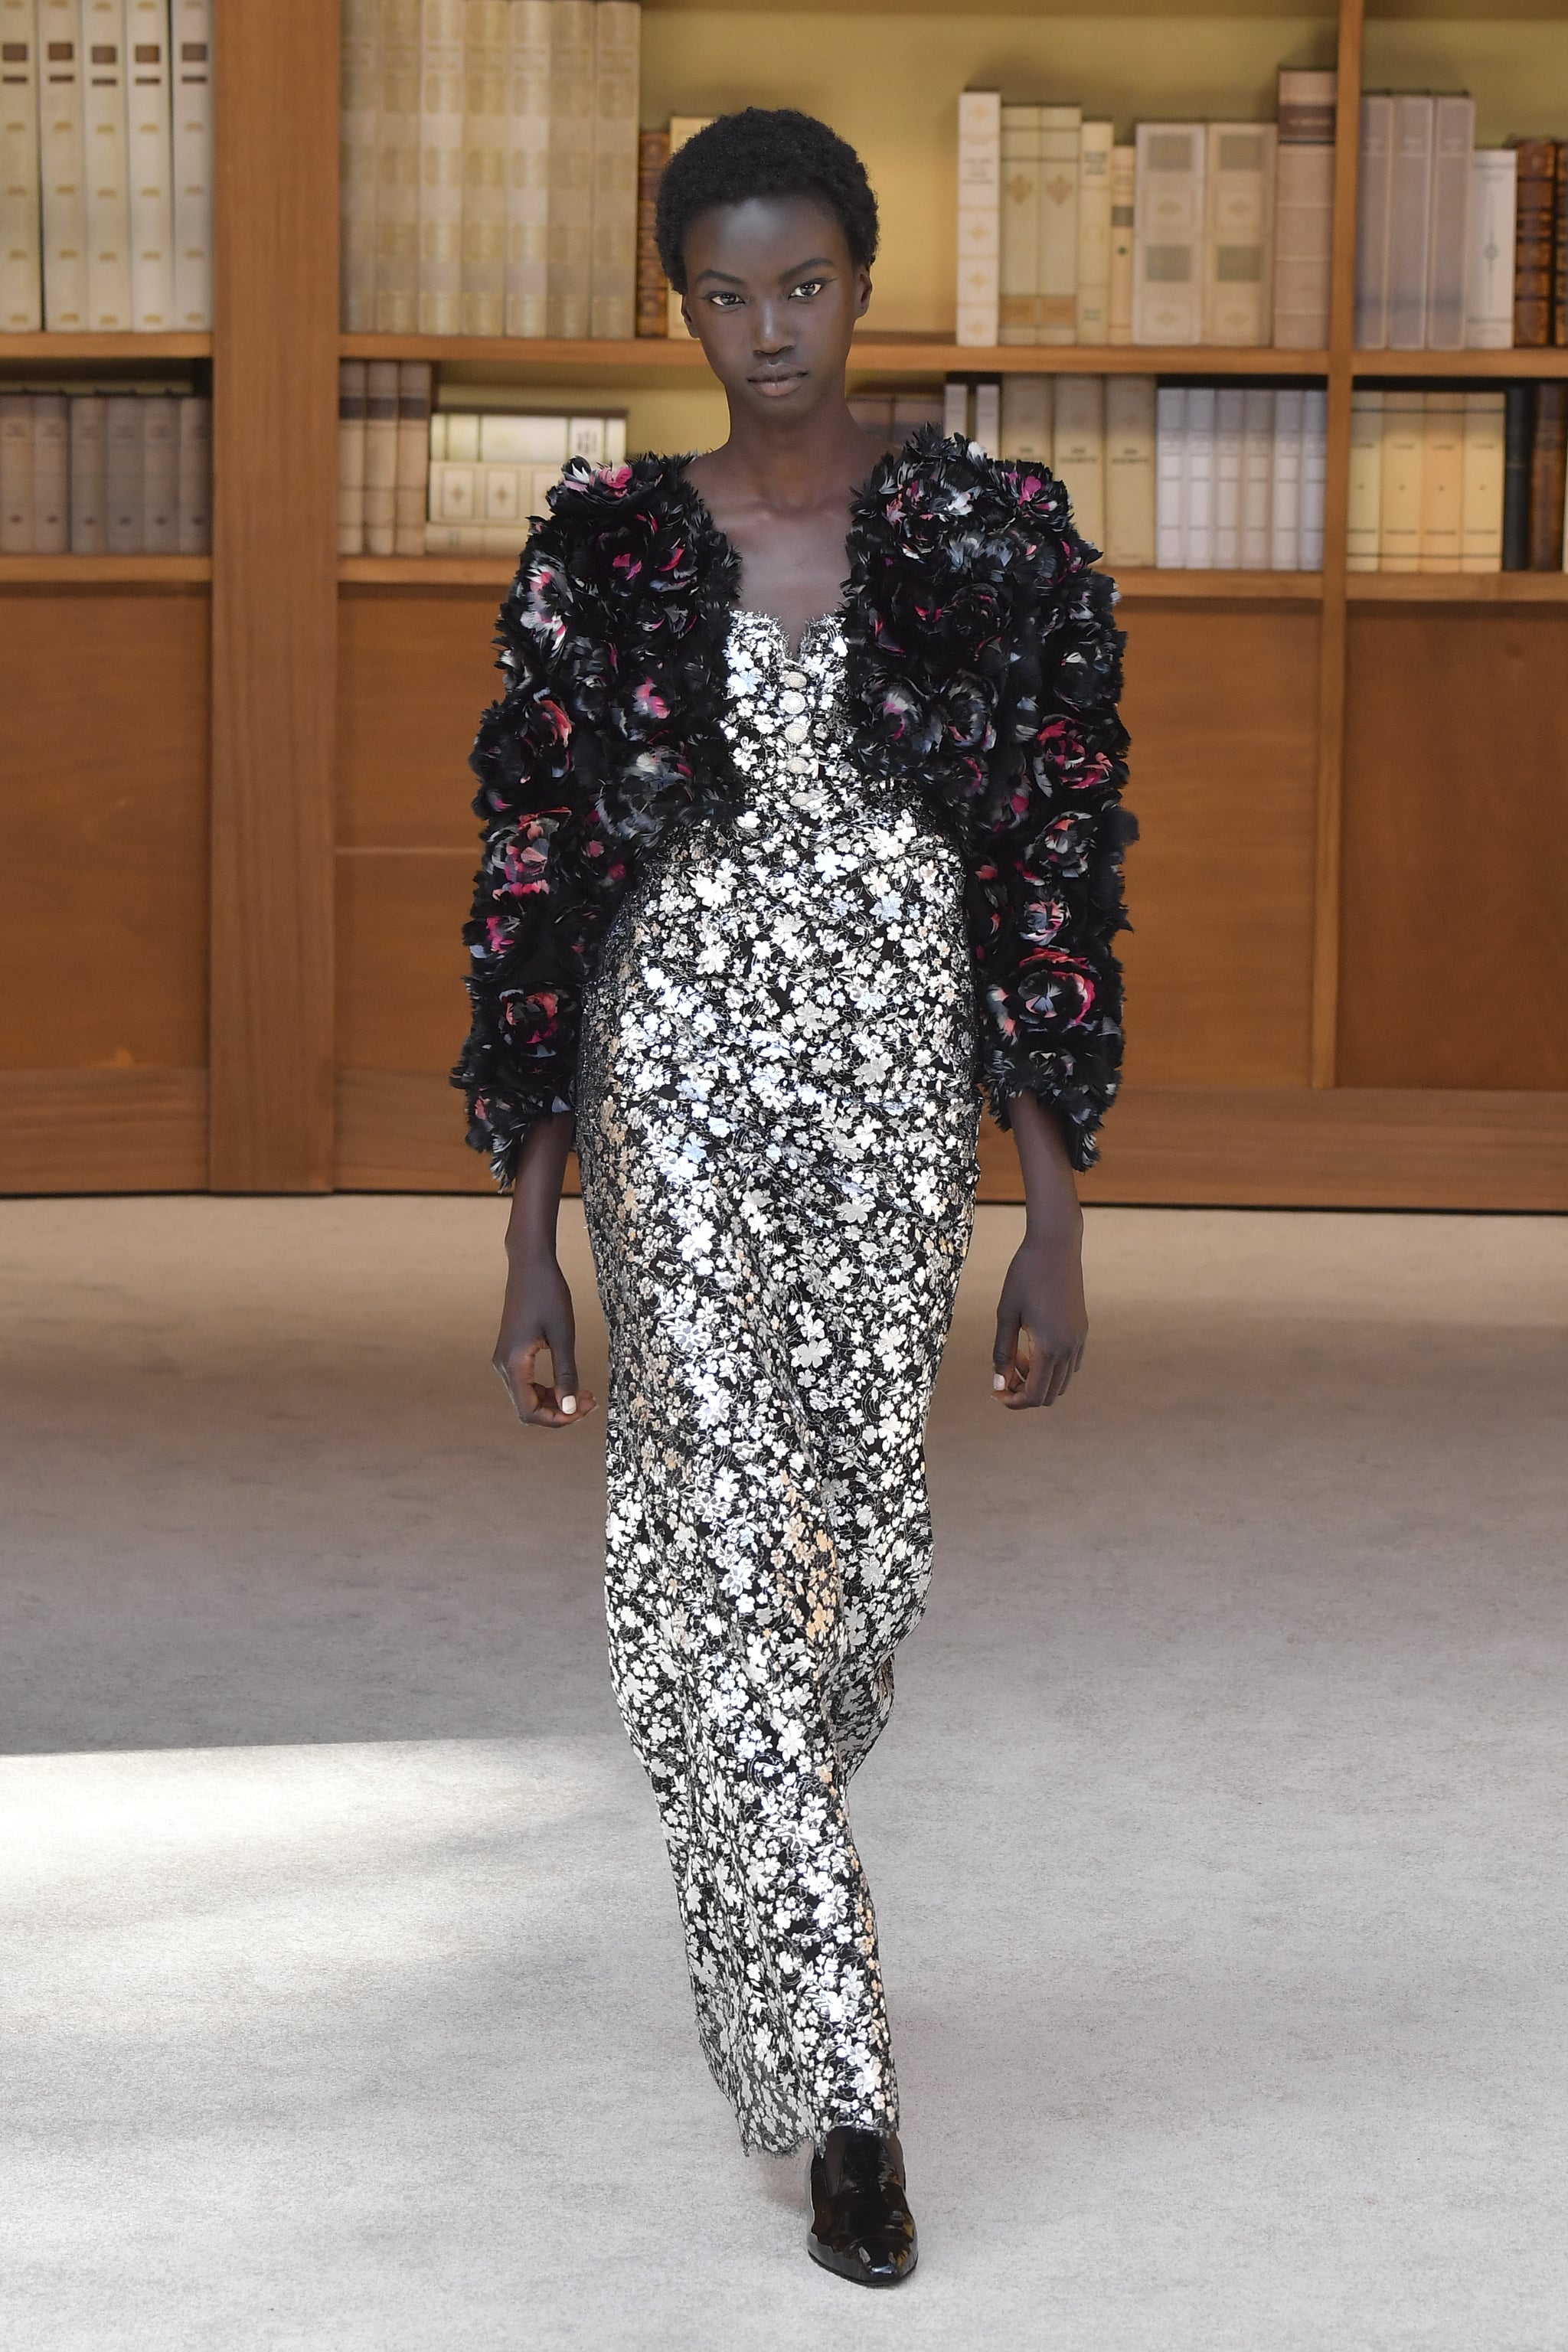 Margot Robbie's Chanel Dress at the 2021 Oscars | POPSUGAR Fashion